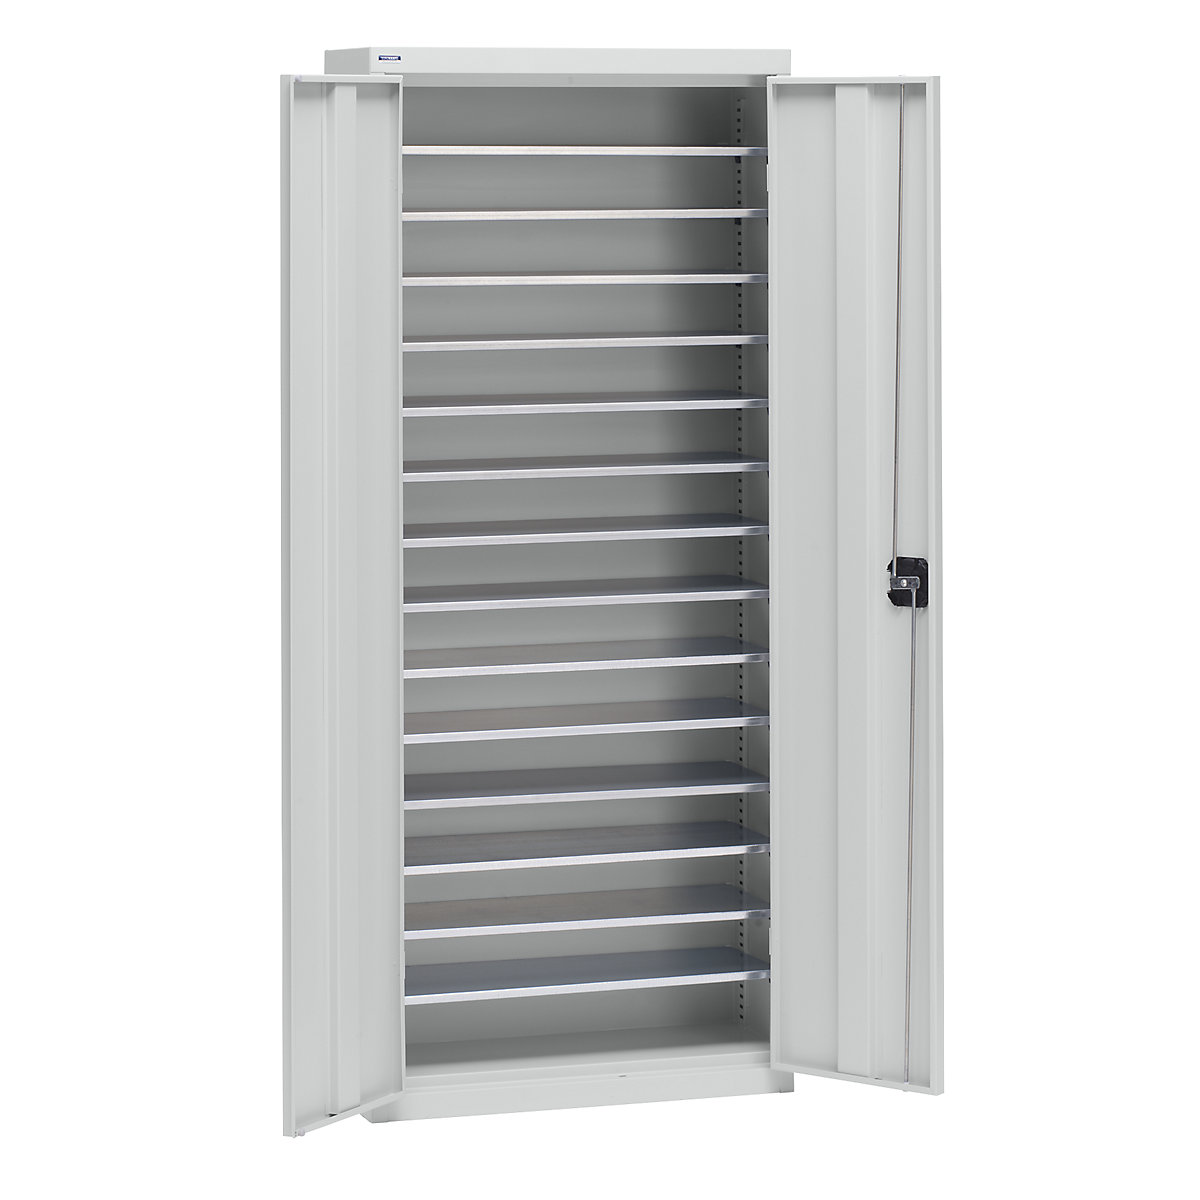 Storage cupboard made of sheet steel – eurokraft pro, height 1575 mm, light grey RAL 7035, 14 shelves-11